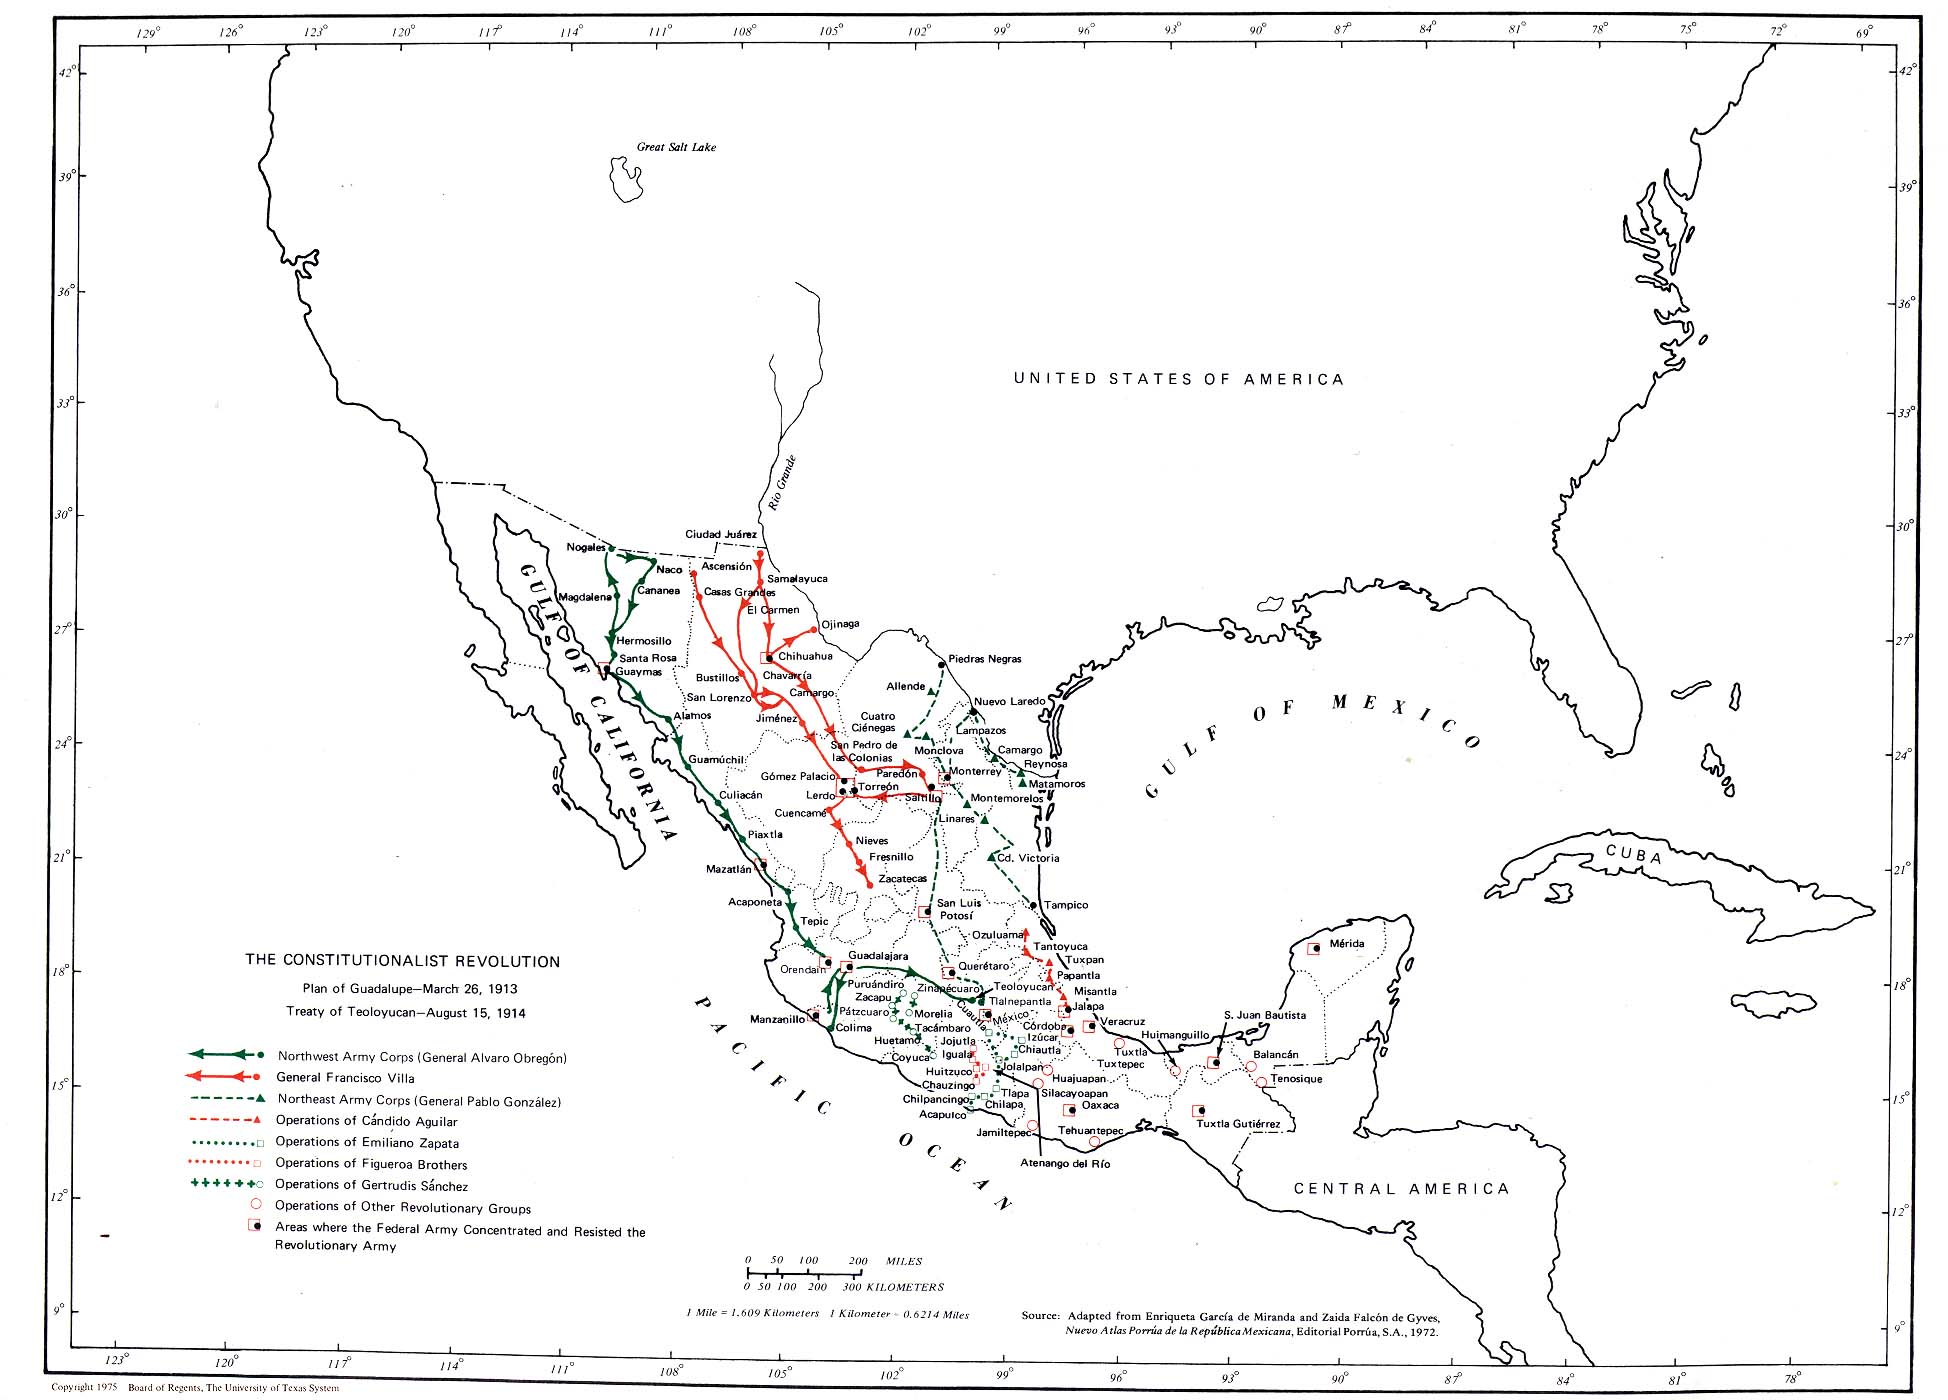 http://www.lib.utexas.edu/maps/atlas_mexico/constitutionalist_revolt.jpg